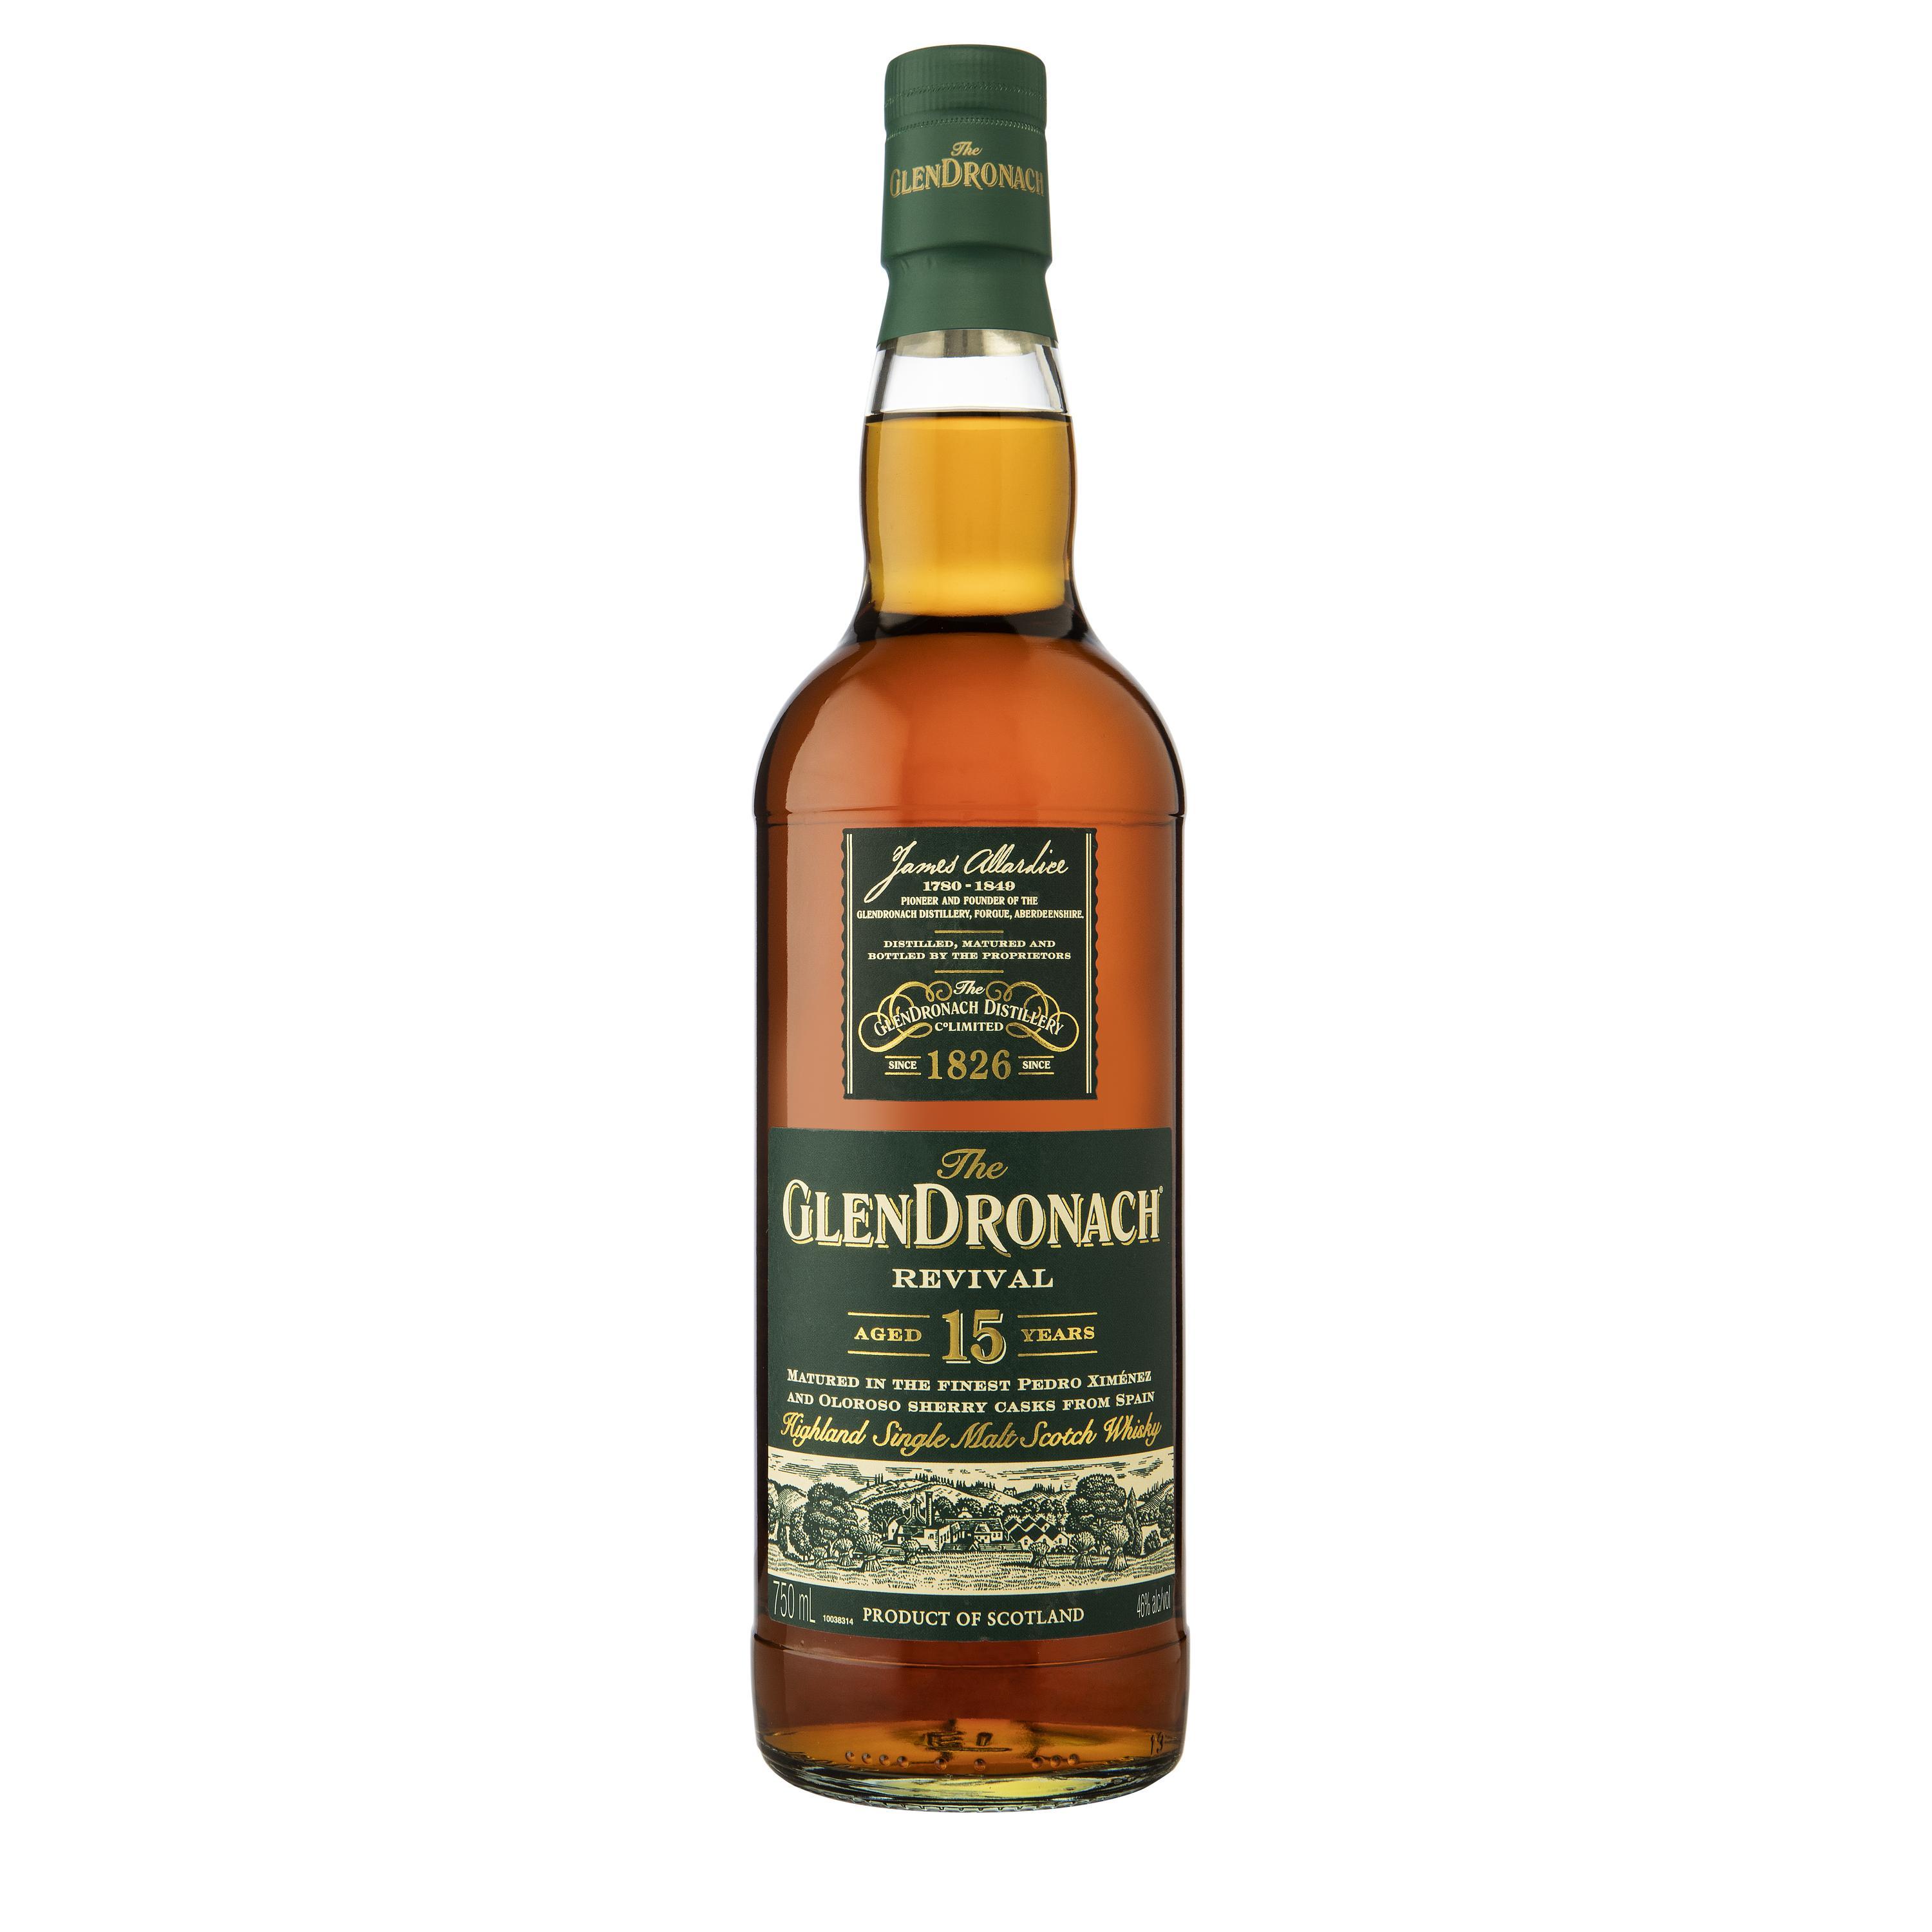 The GlenDronach Single Malt Scotch Whisky Revival 15 Years